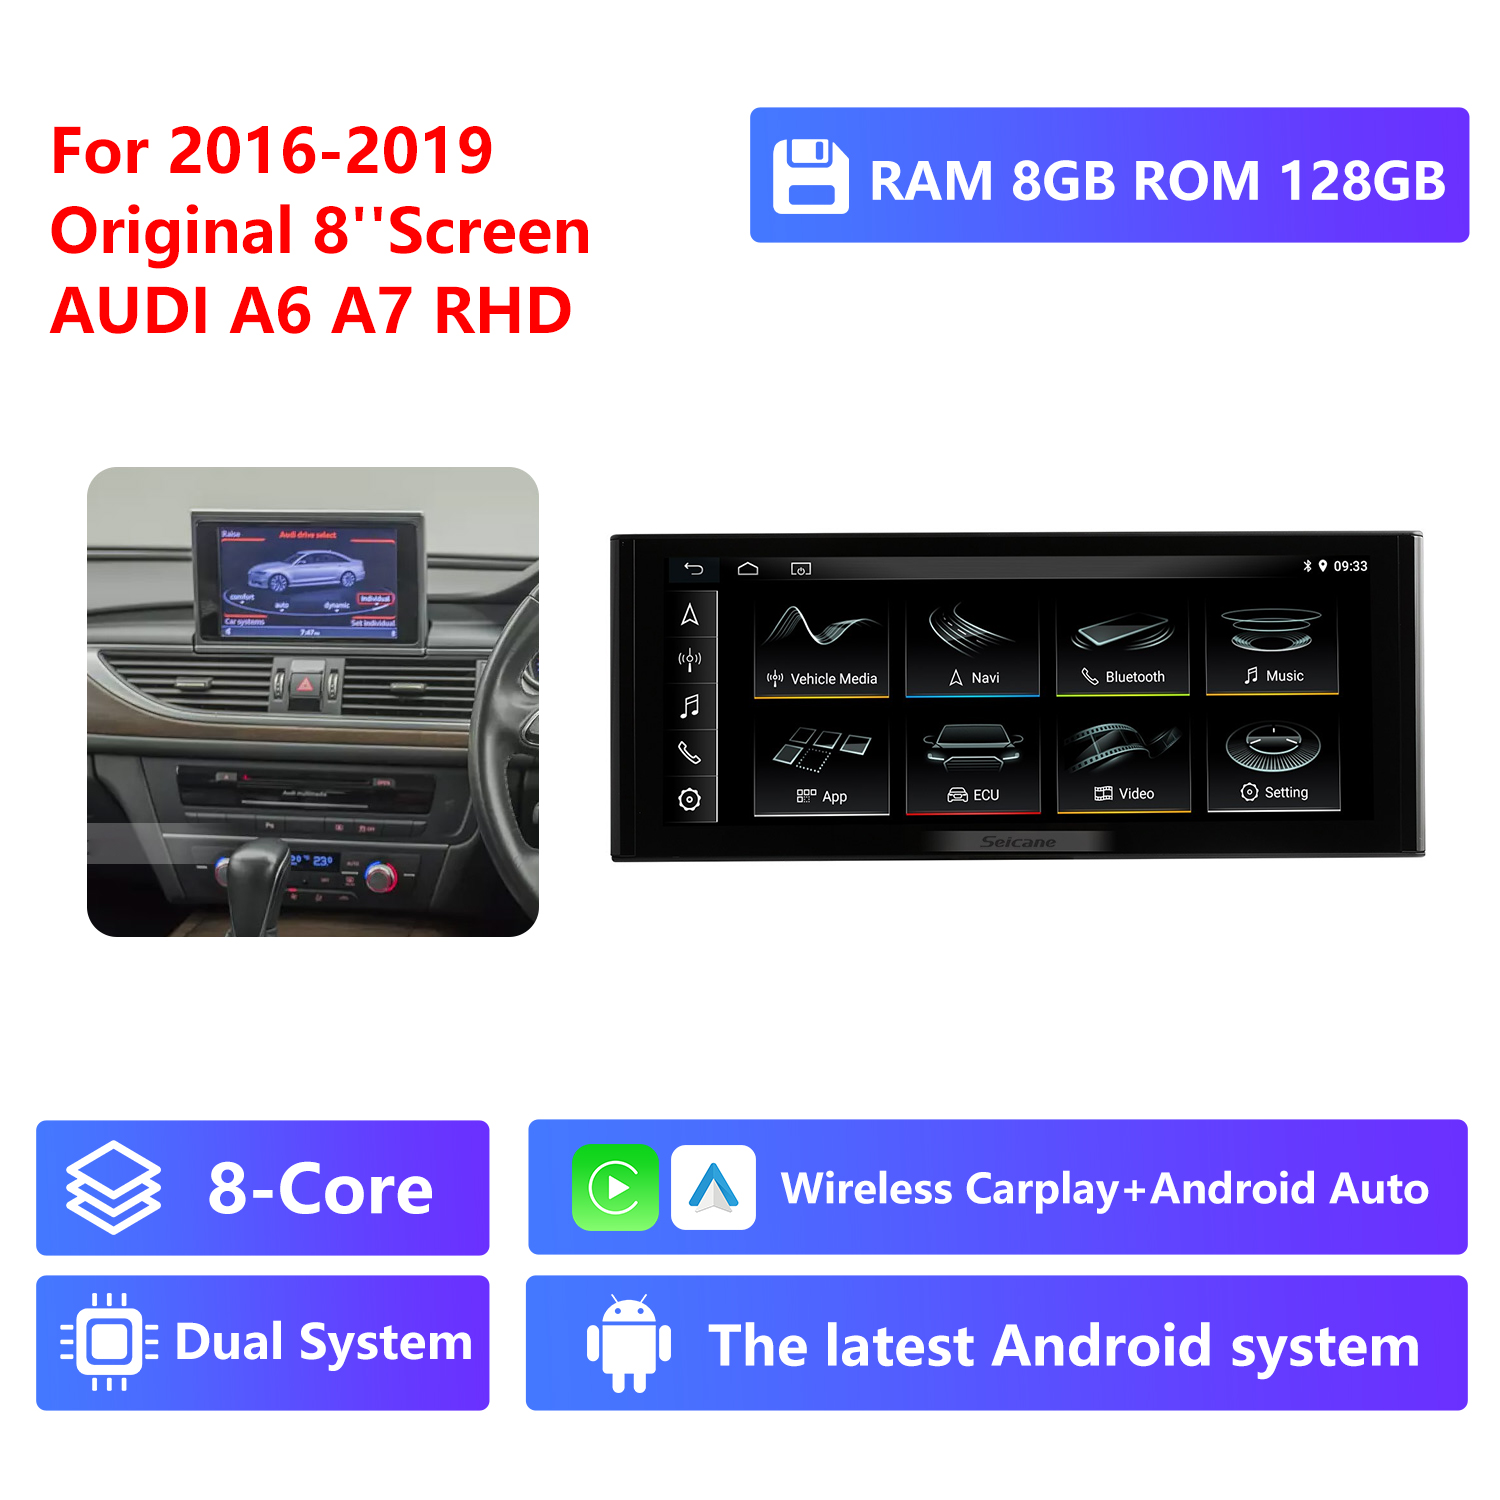 8-Core RAM 8G ROM 128G,2016-2019, Original 8"Screen,RHD